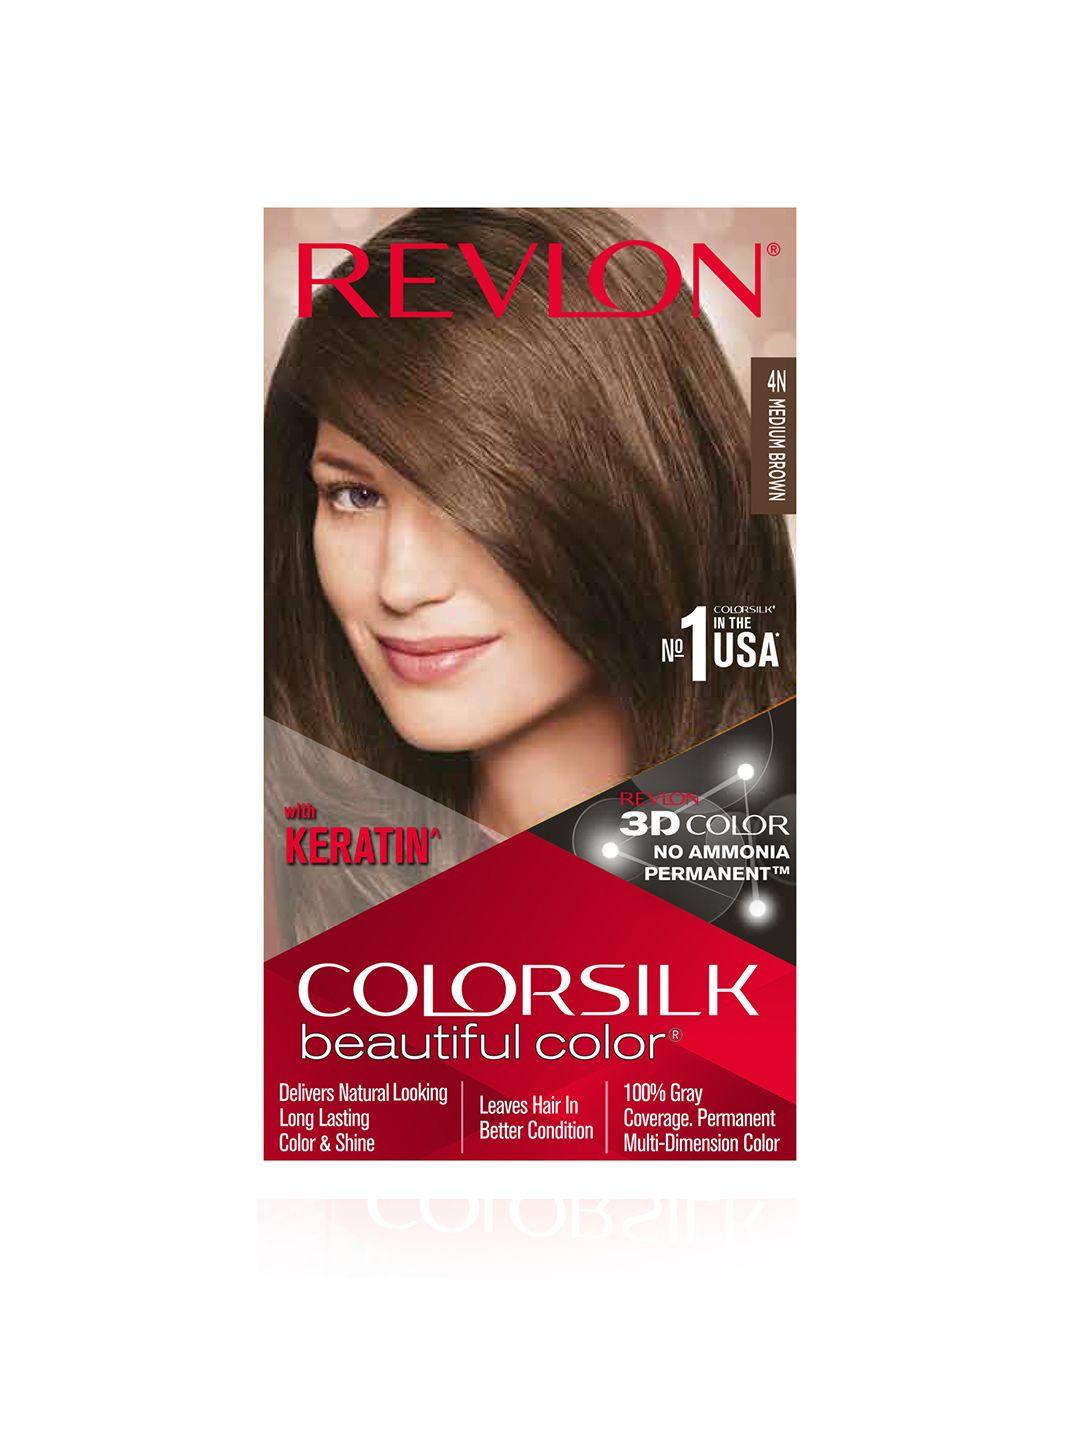 revlon color silk hair color with keratin - medium brown 4n